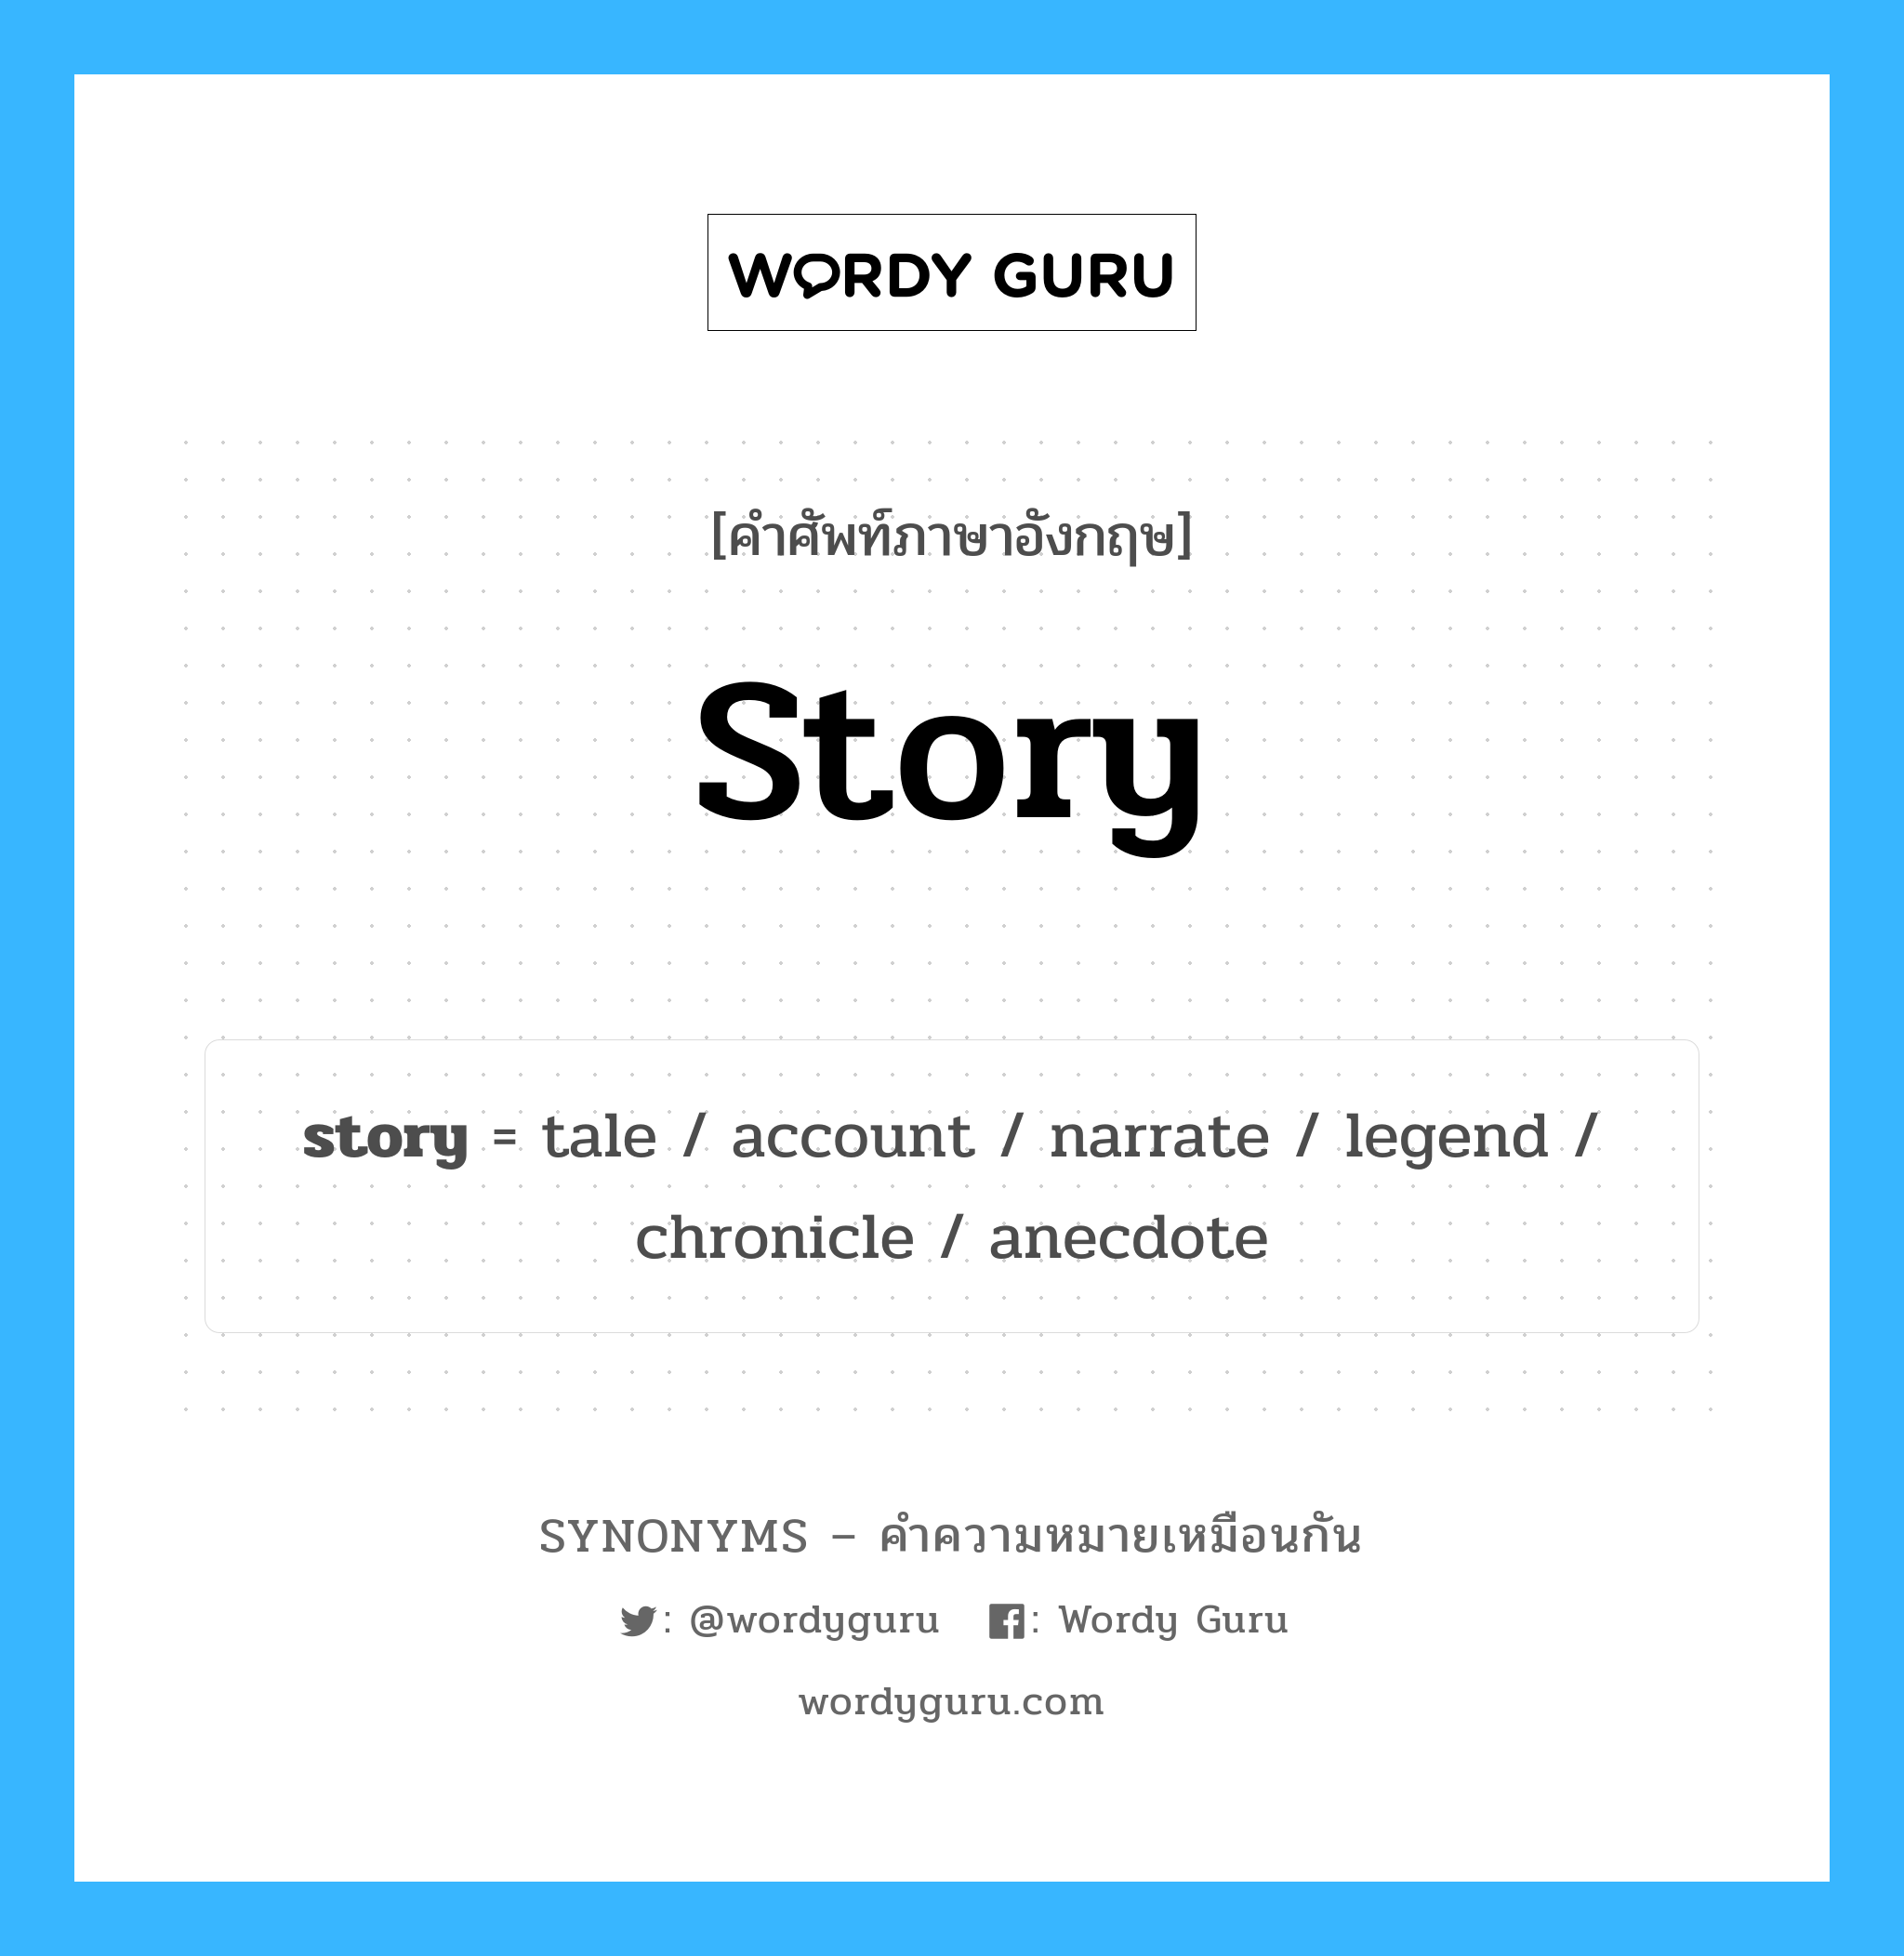 account เป็นหนึ่งใน story และมีคำอื่น ๆ อีกดังนี้, คำศัพท์ภาษาอังกฤษ account ความหมายคล้ายกันกับ story แปลว่า บัญชี หมวด story